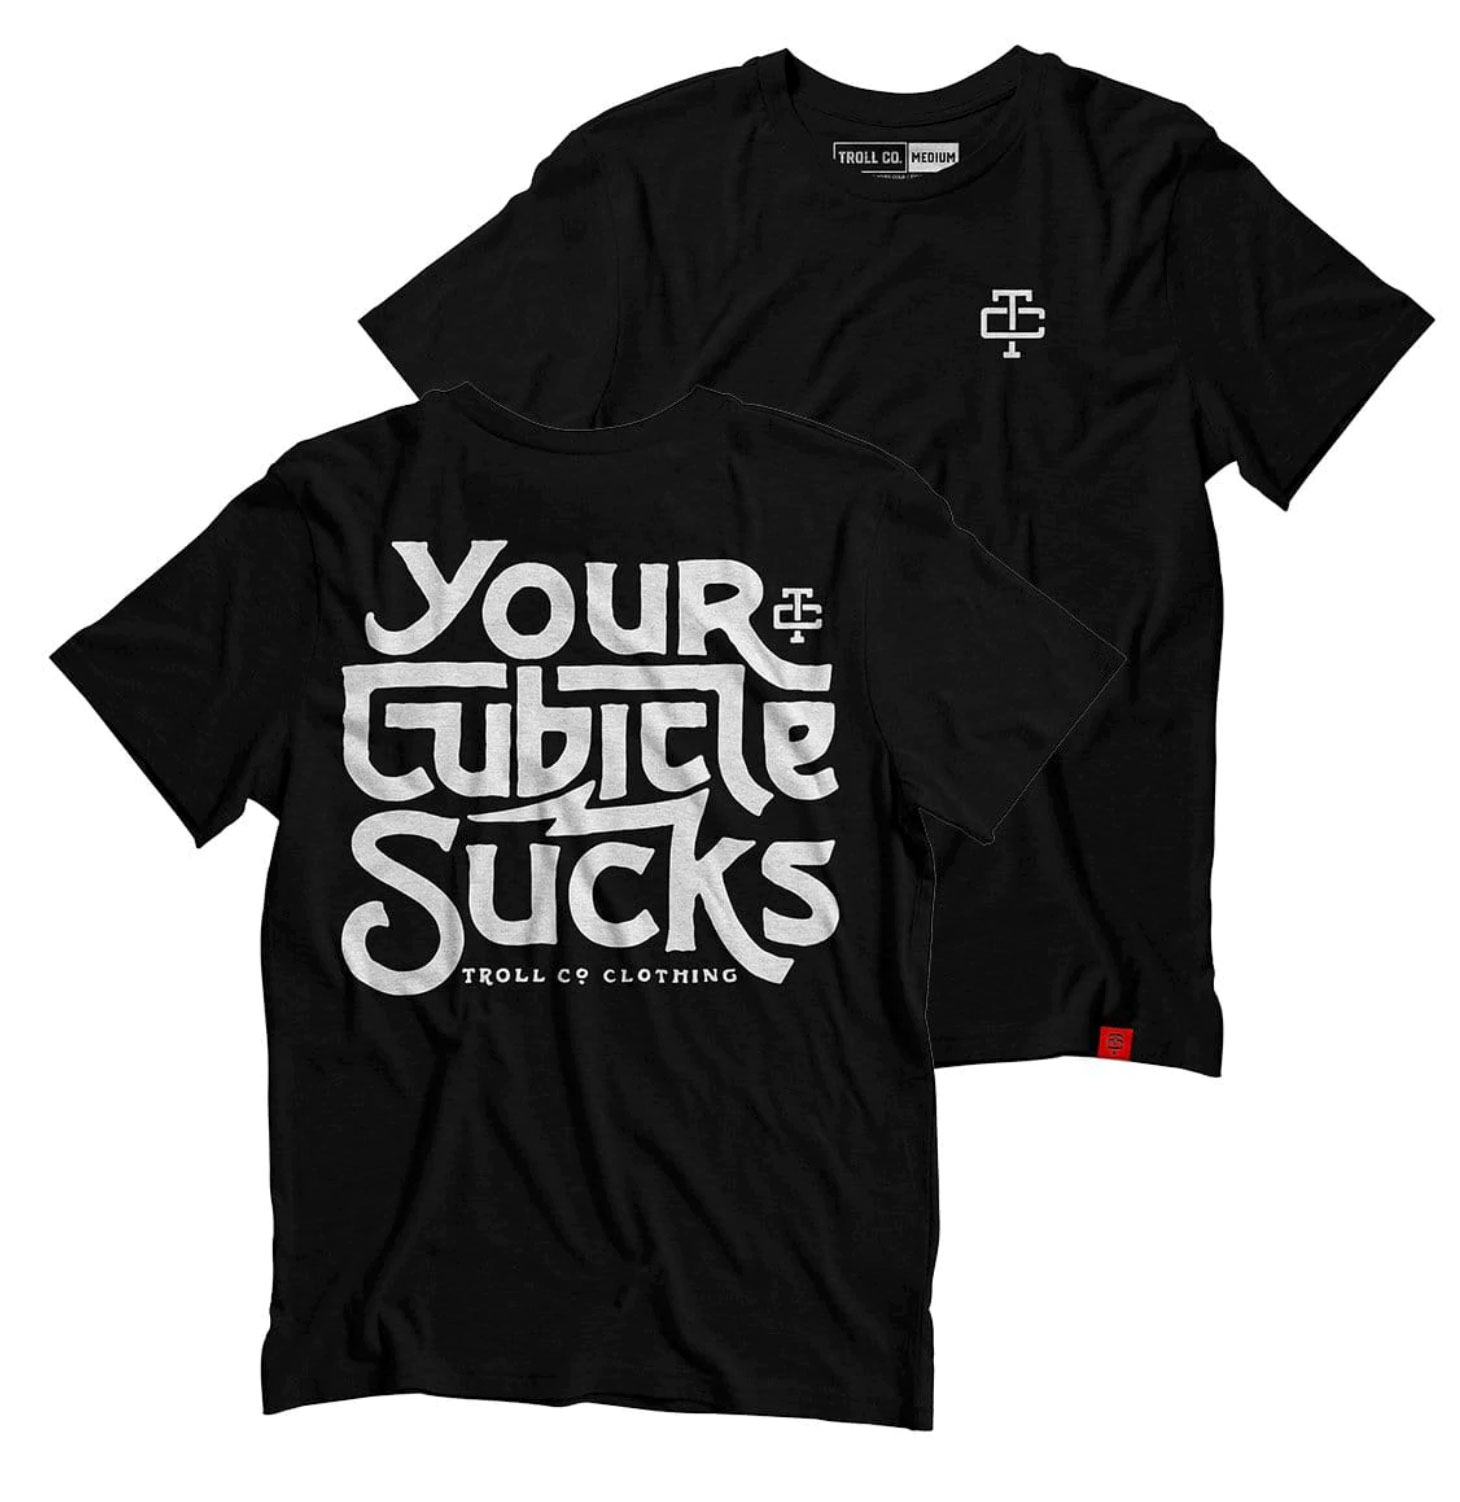 Your Cubicle Sucks